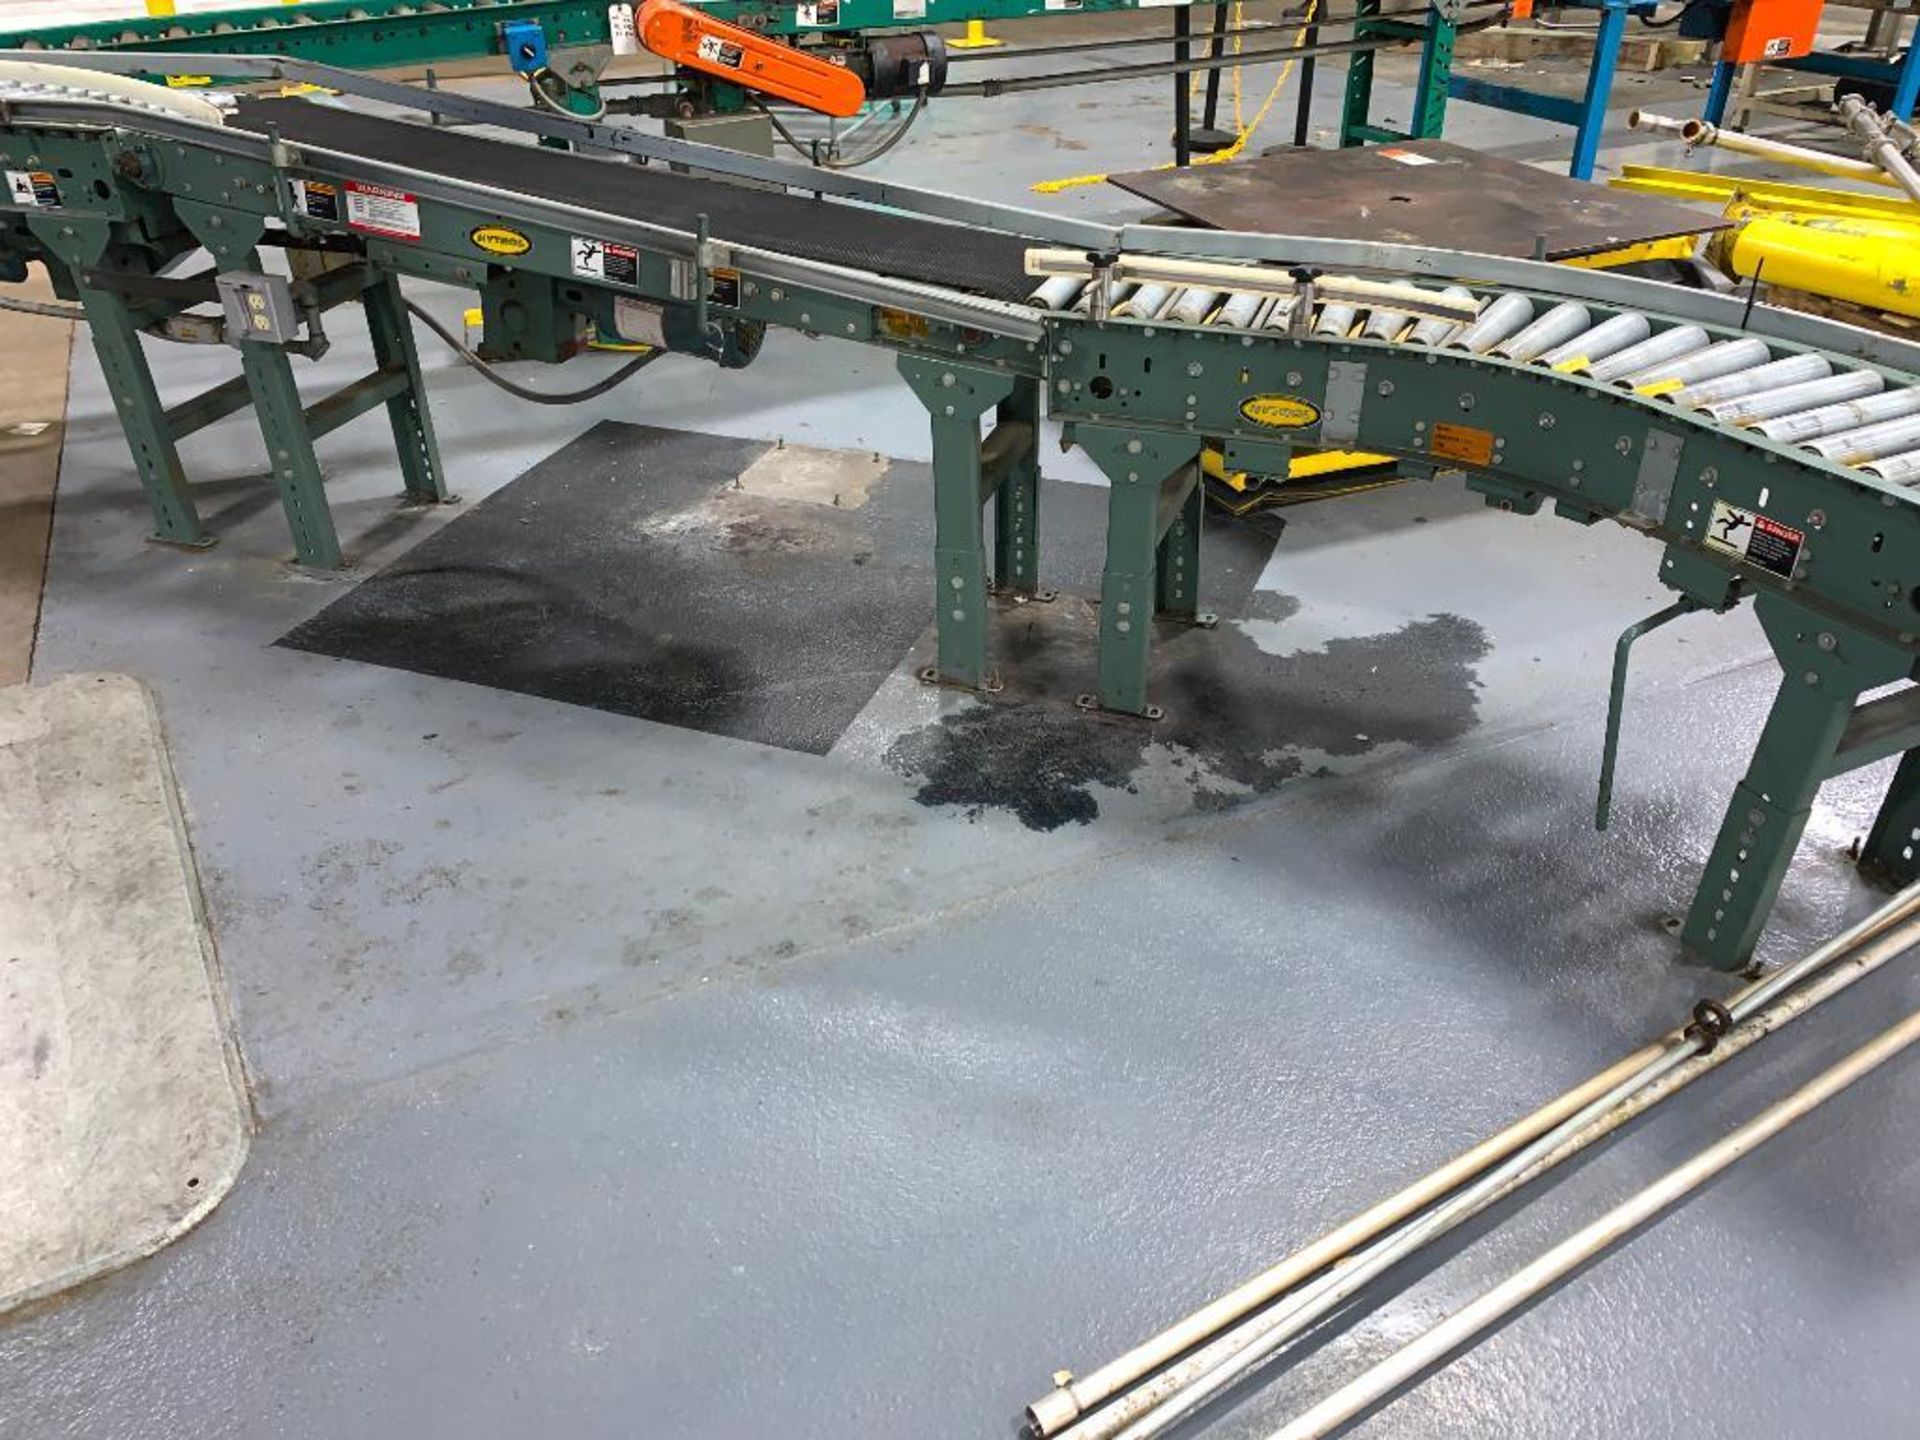 Hytrol mild steel rubber belt and power roller conveyor - Image 11 of 11